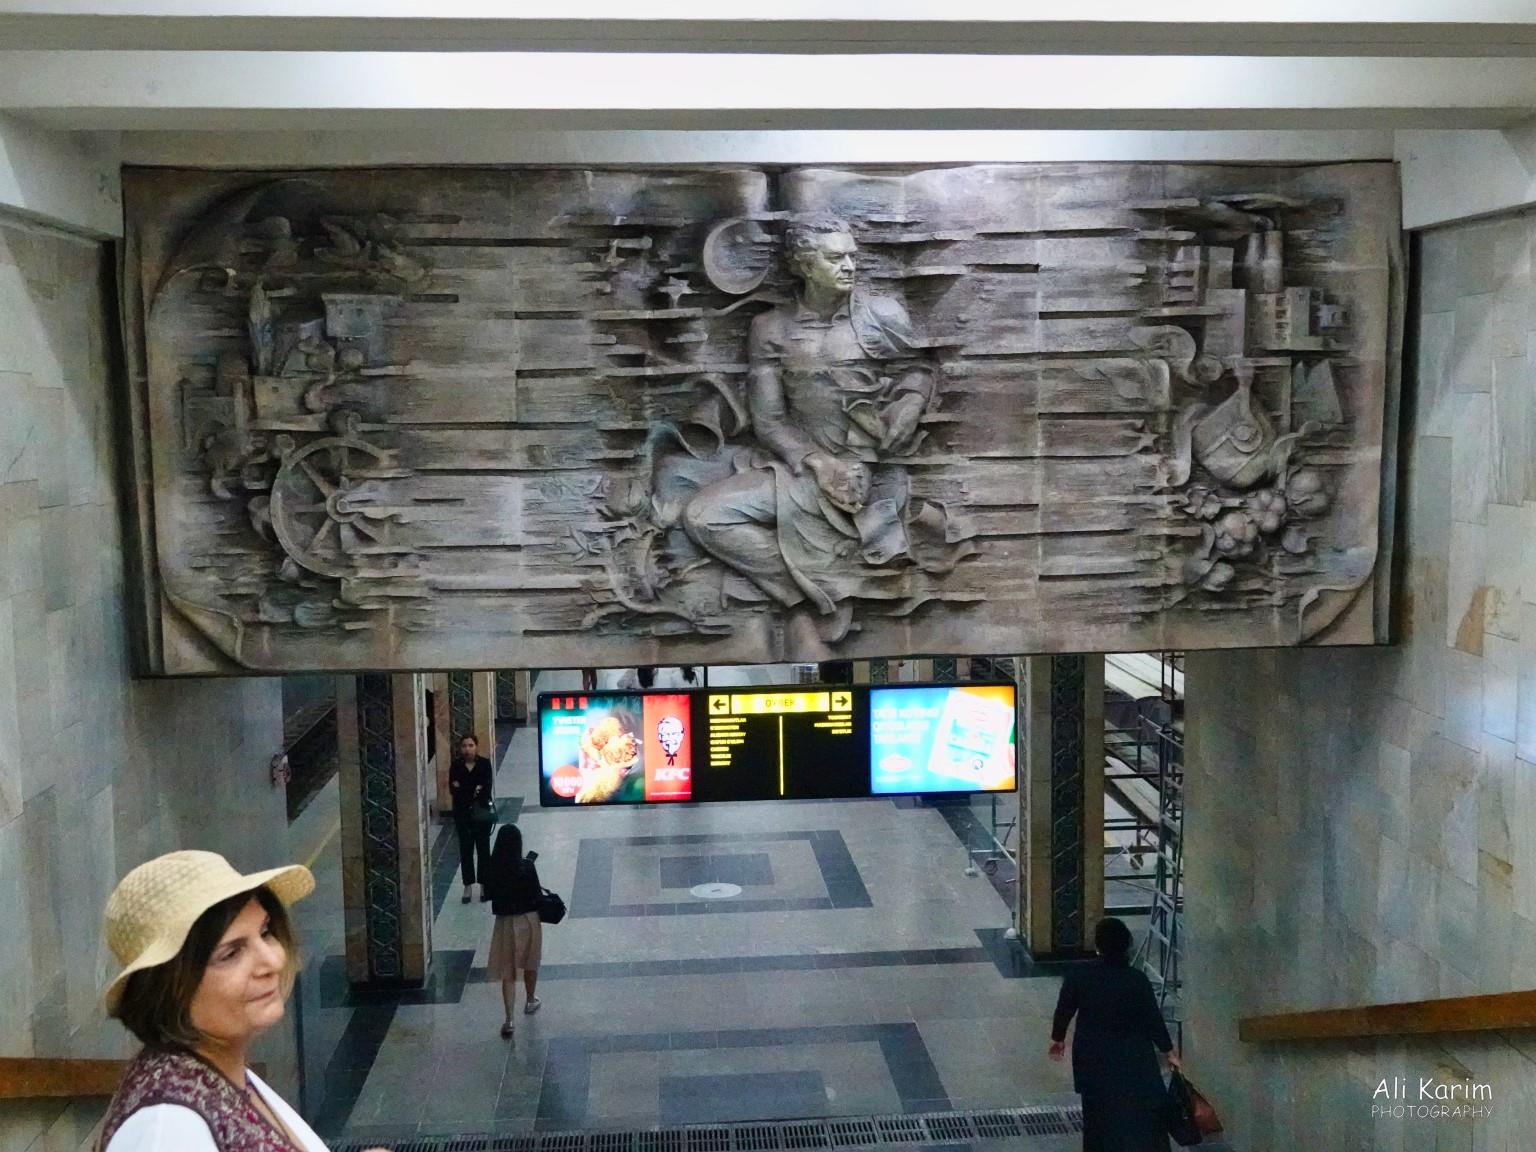 Tashkent, Oct 2019, Interesting relief decor at entrance to one subway station